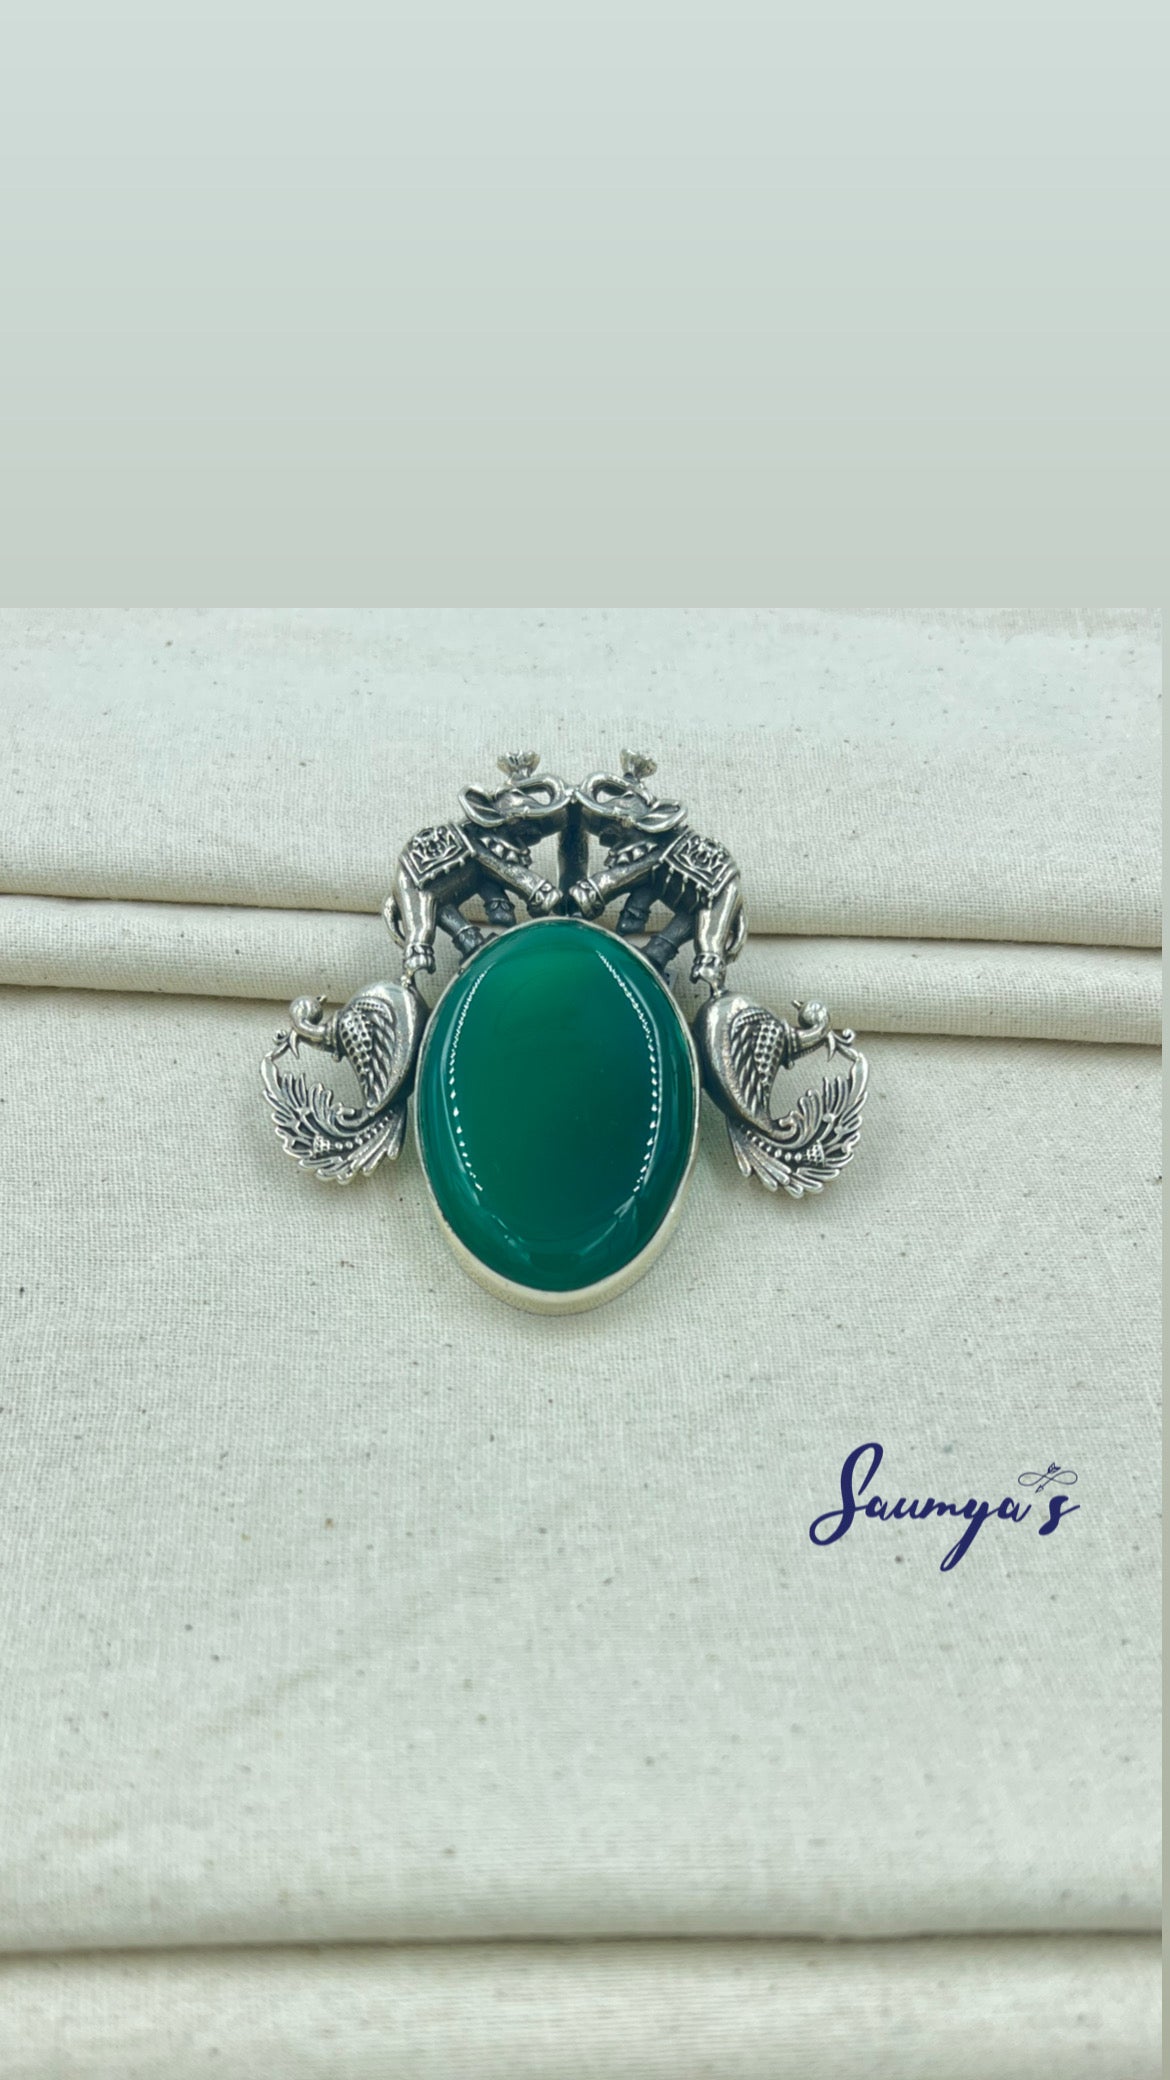 Handmade Pendant with Combination of Elephant,Peacock & green onyx!